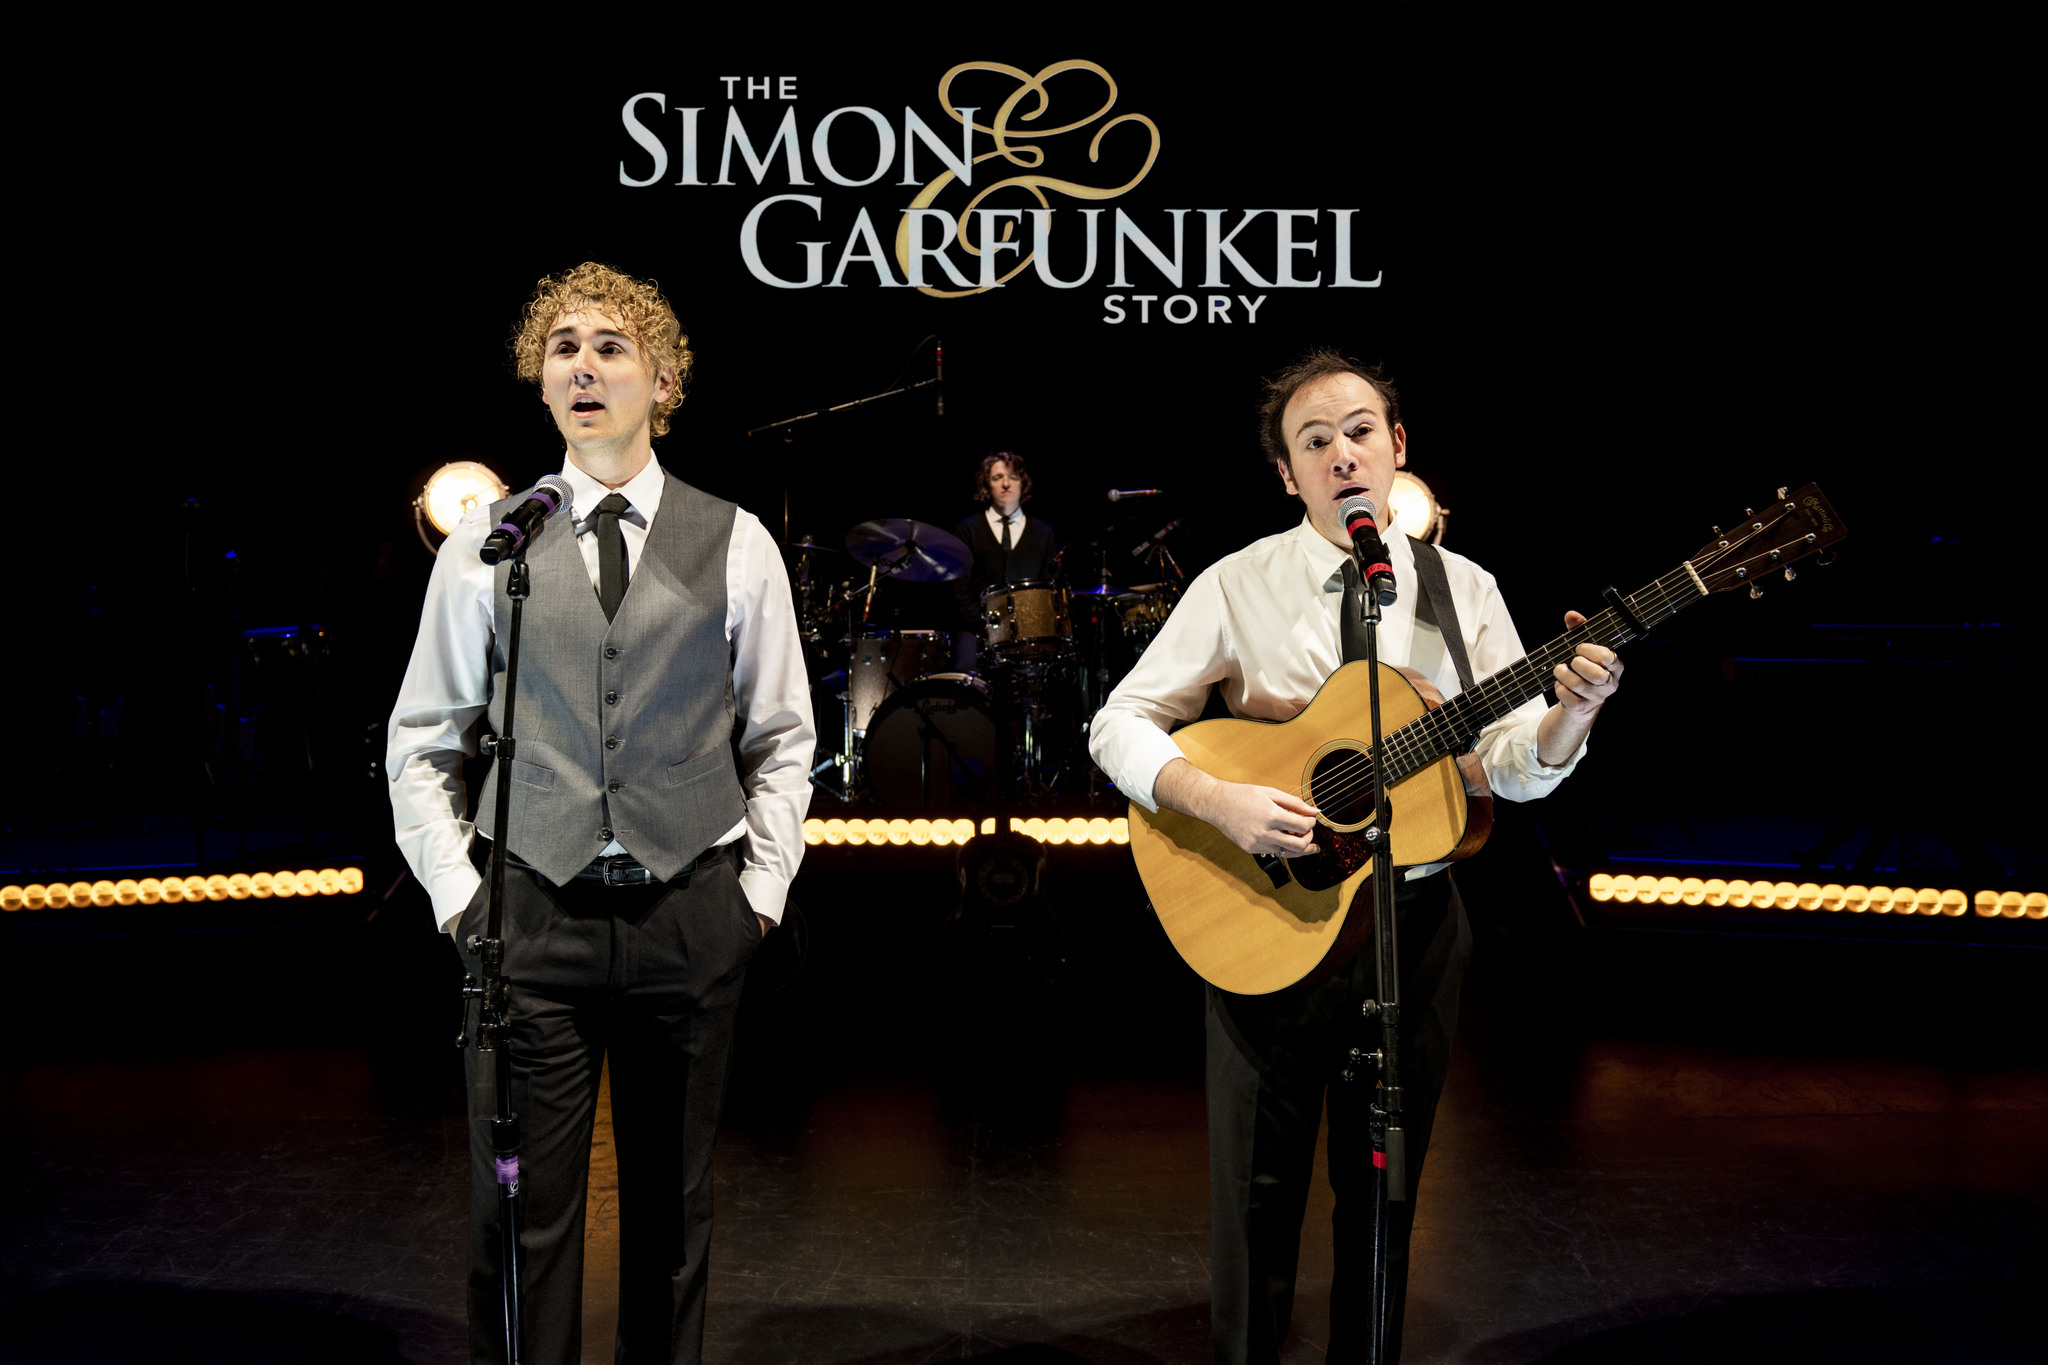 Paul Simon - Simon and Garfunkel played college and